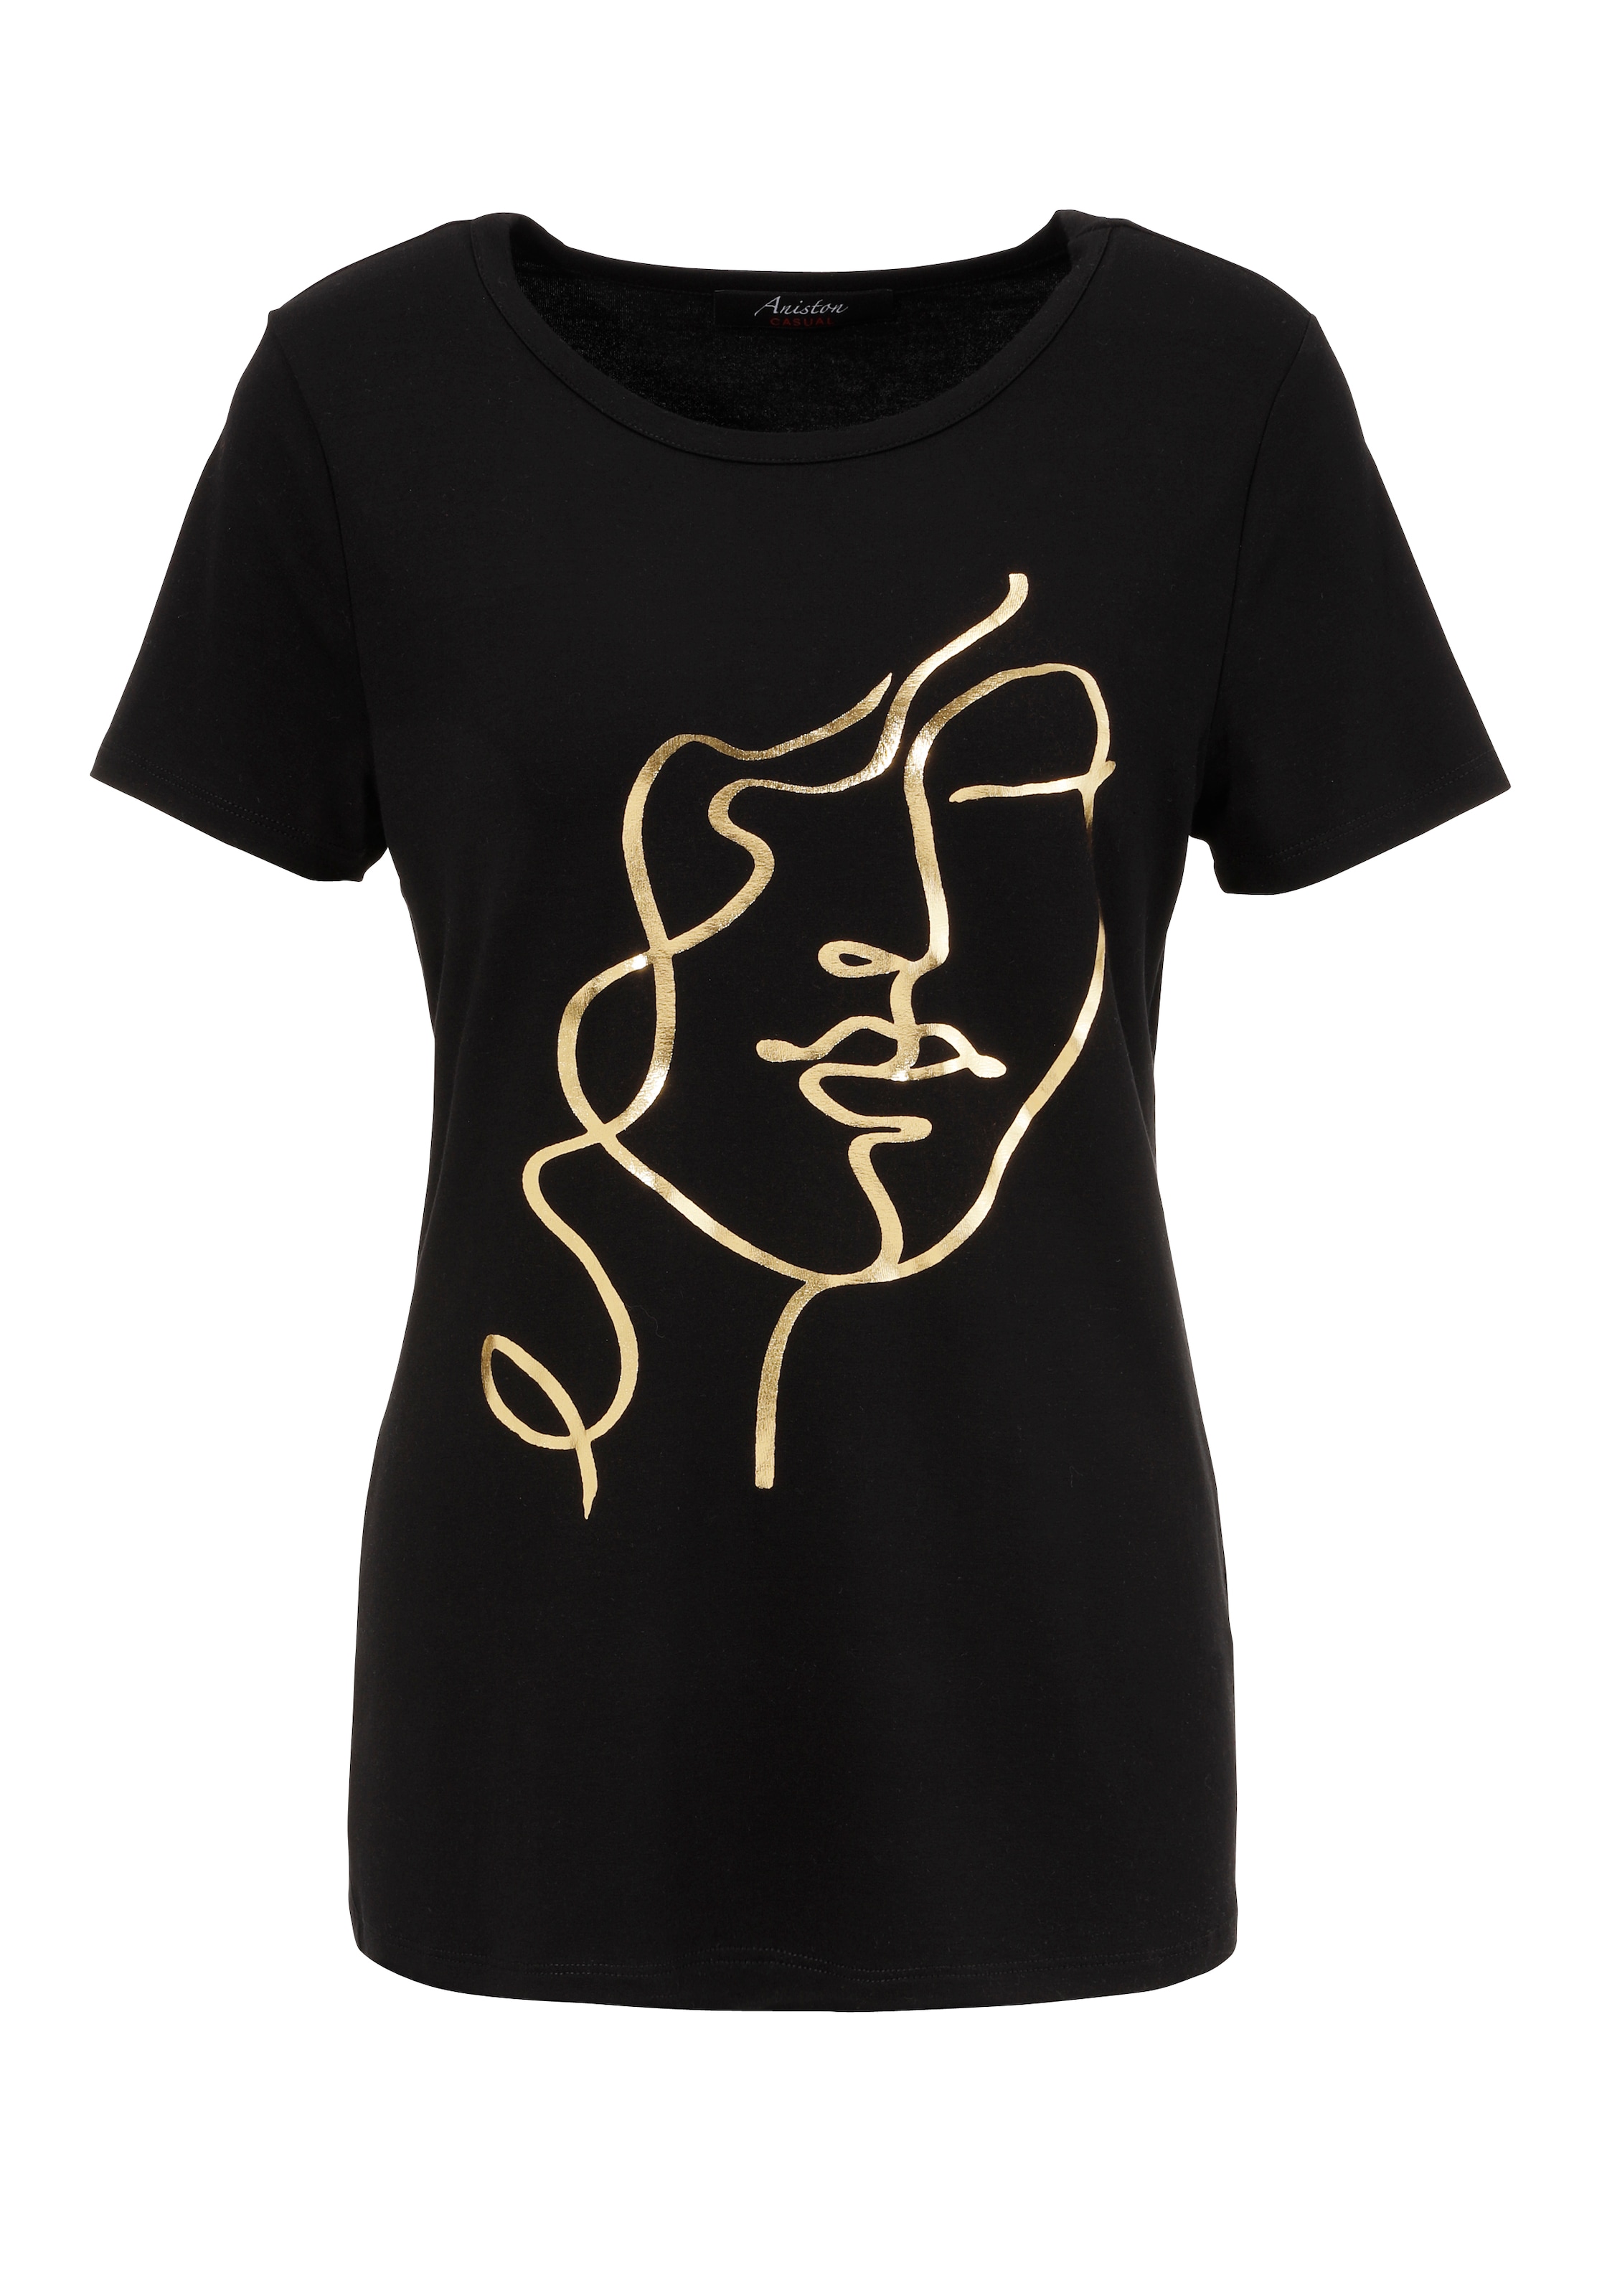 T-Shirt, mit abstraktem Gesicht aus goldfarbenem Folienprint - NEUE KOLLEKTION